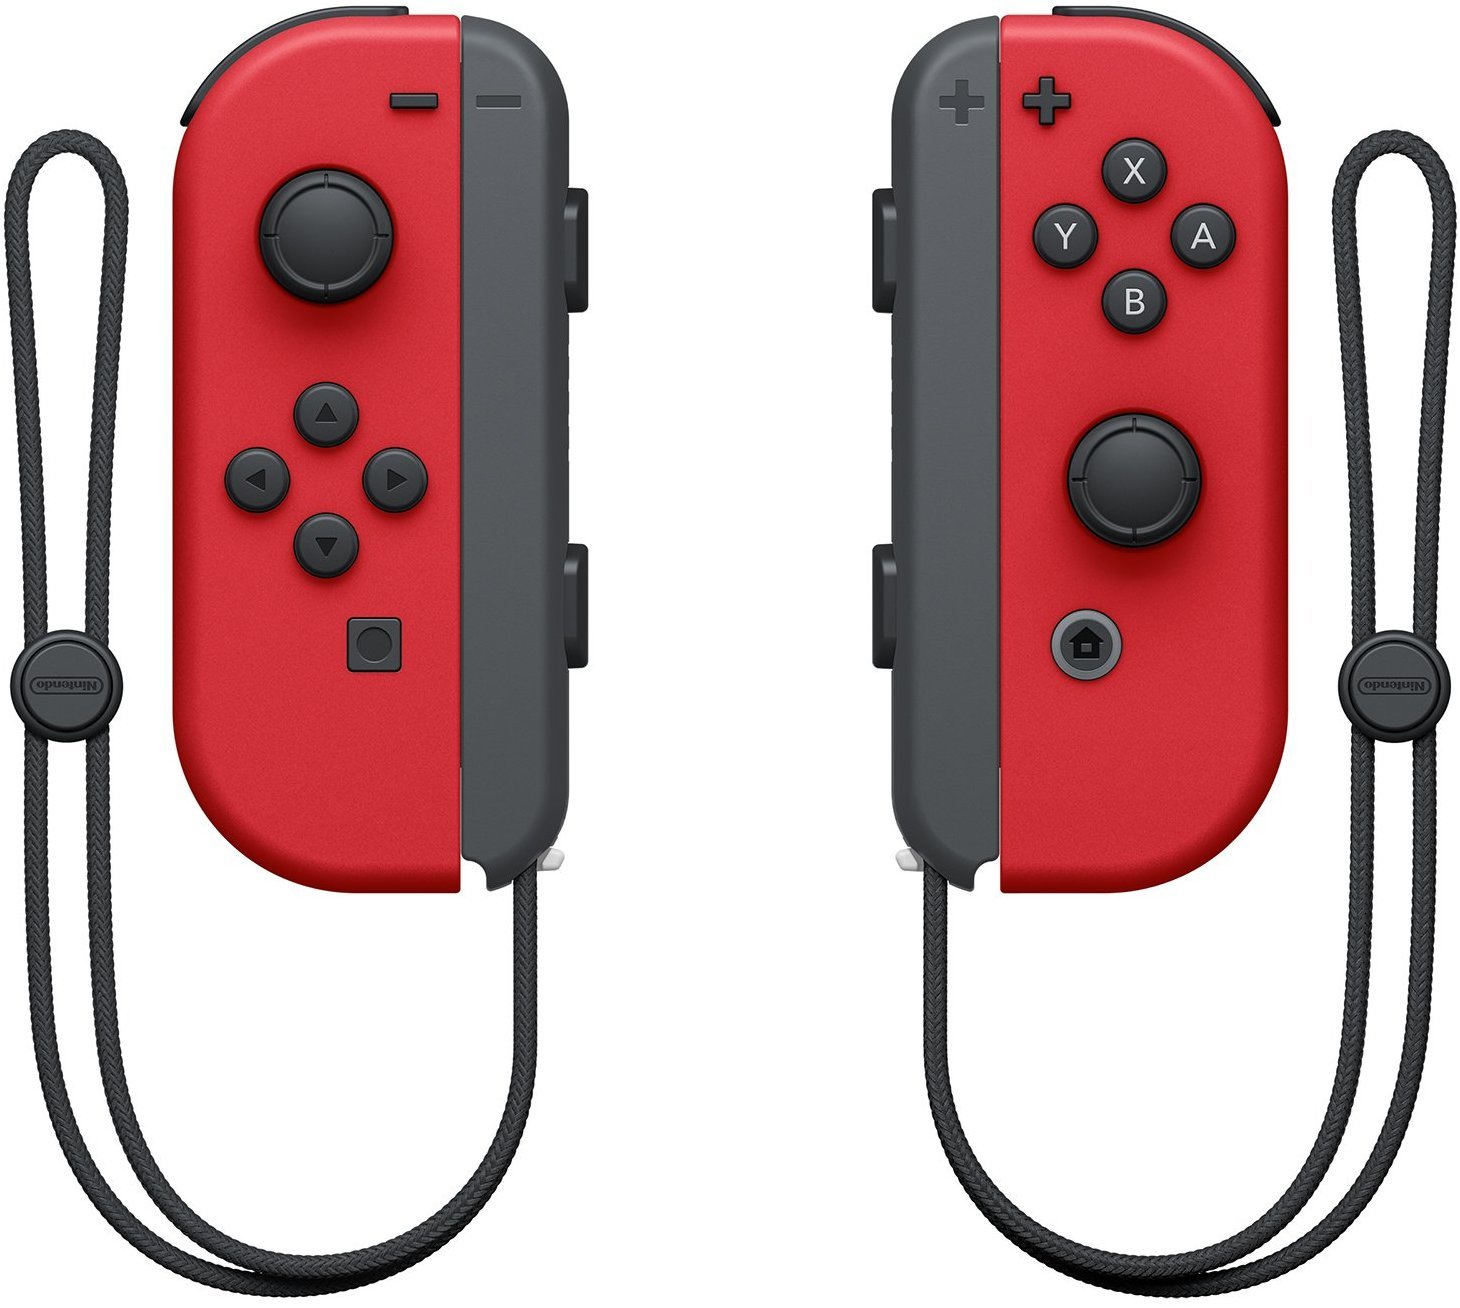 Every color Nintendo Switch Joy-Con controller | iMore